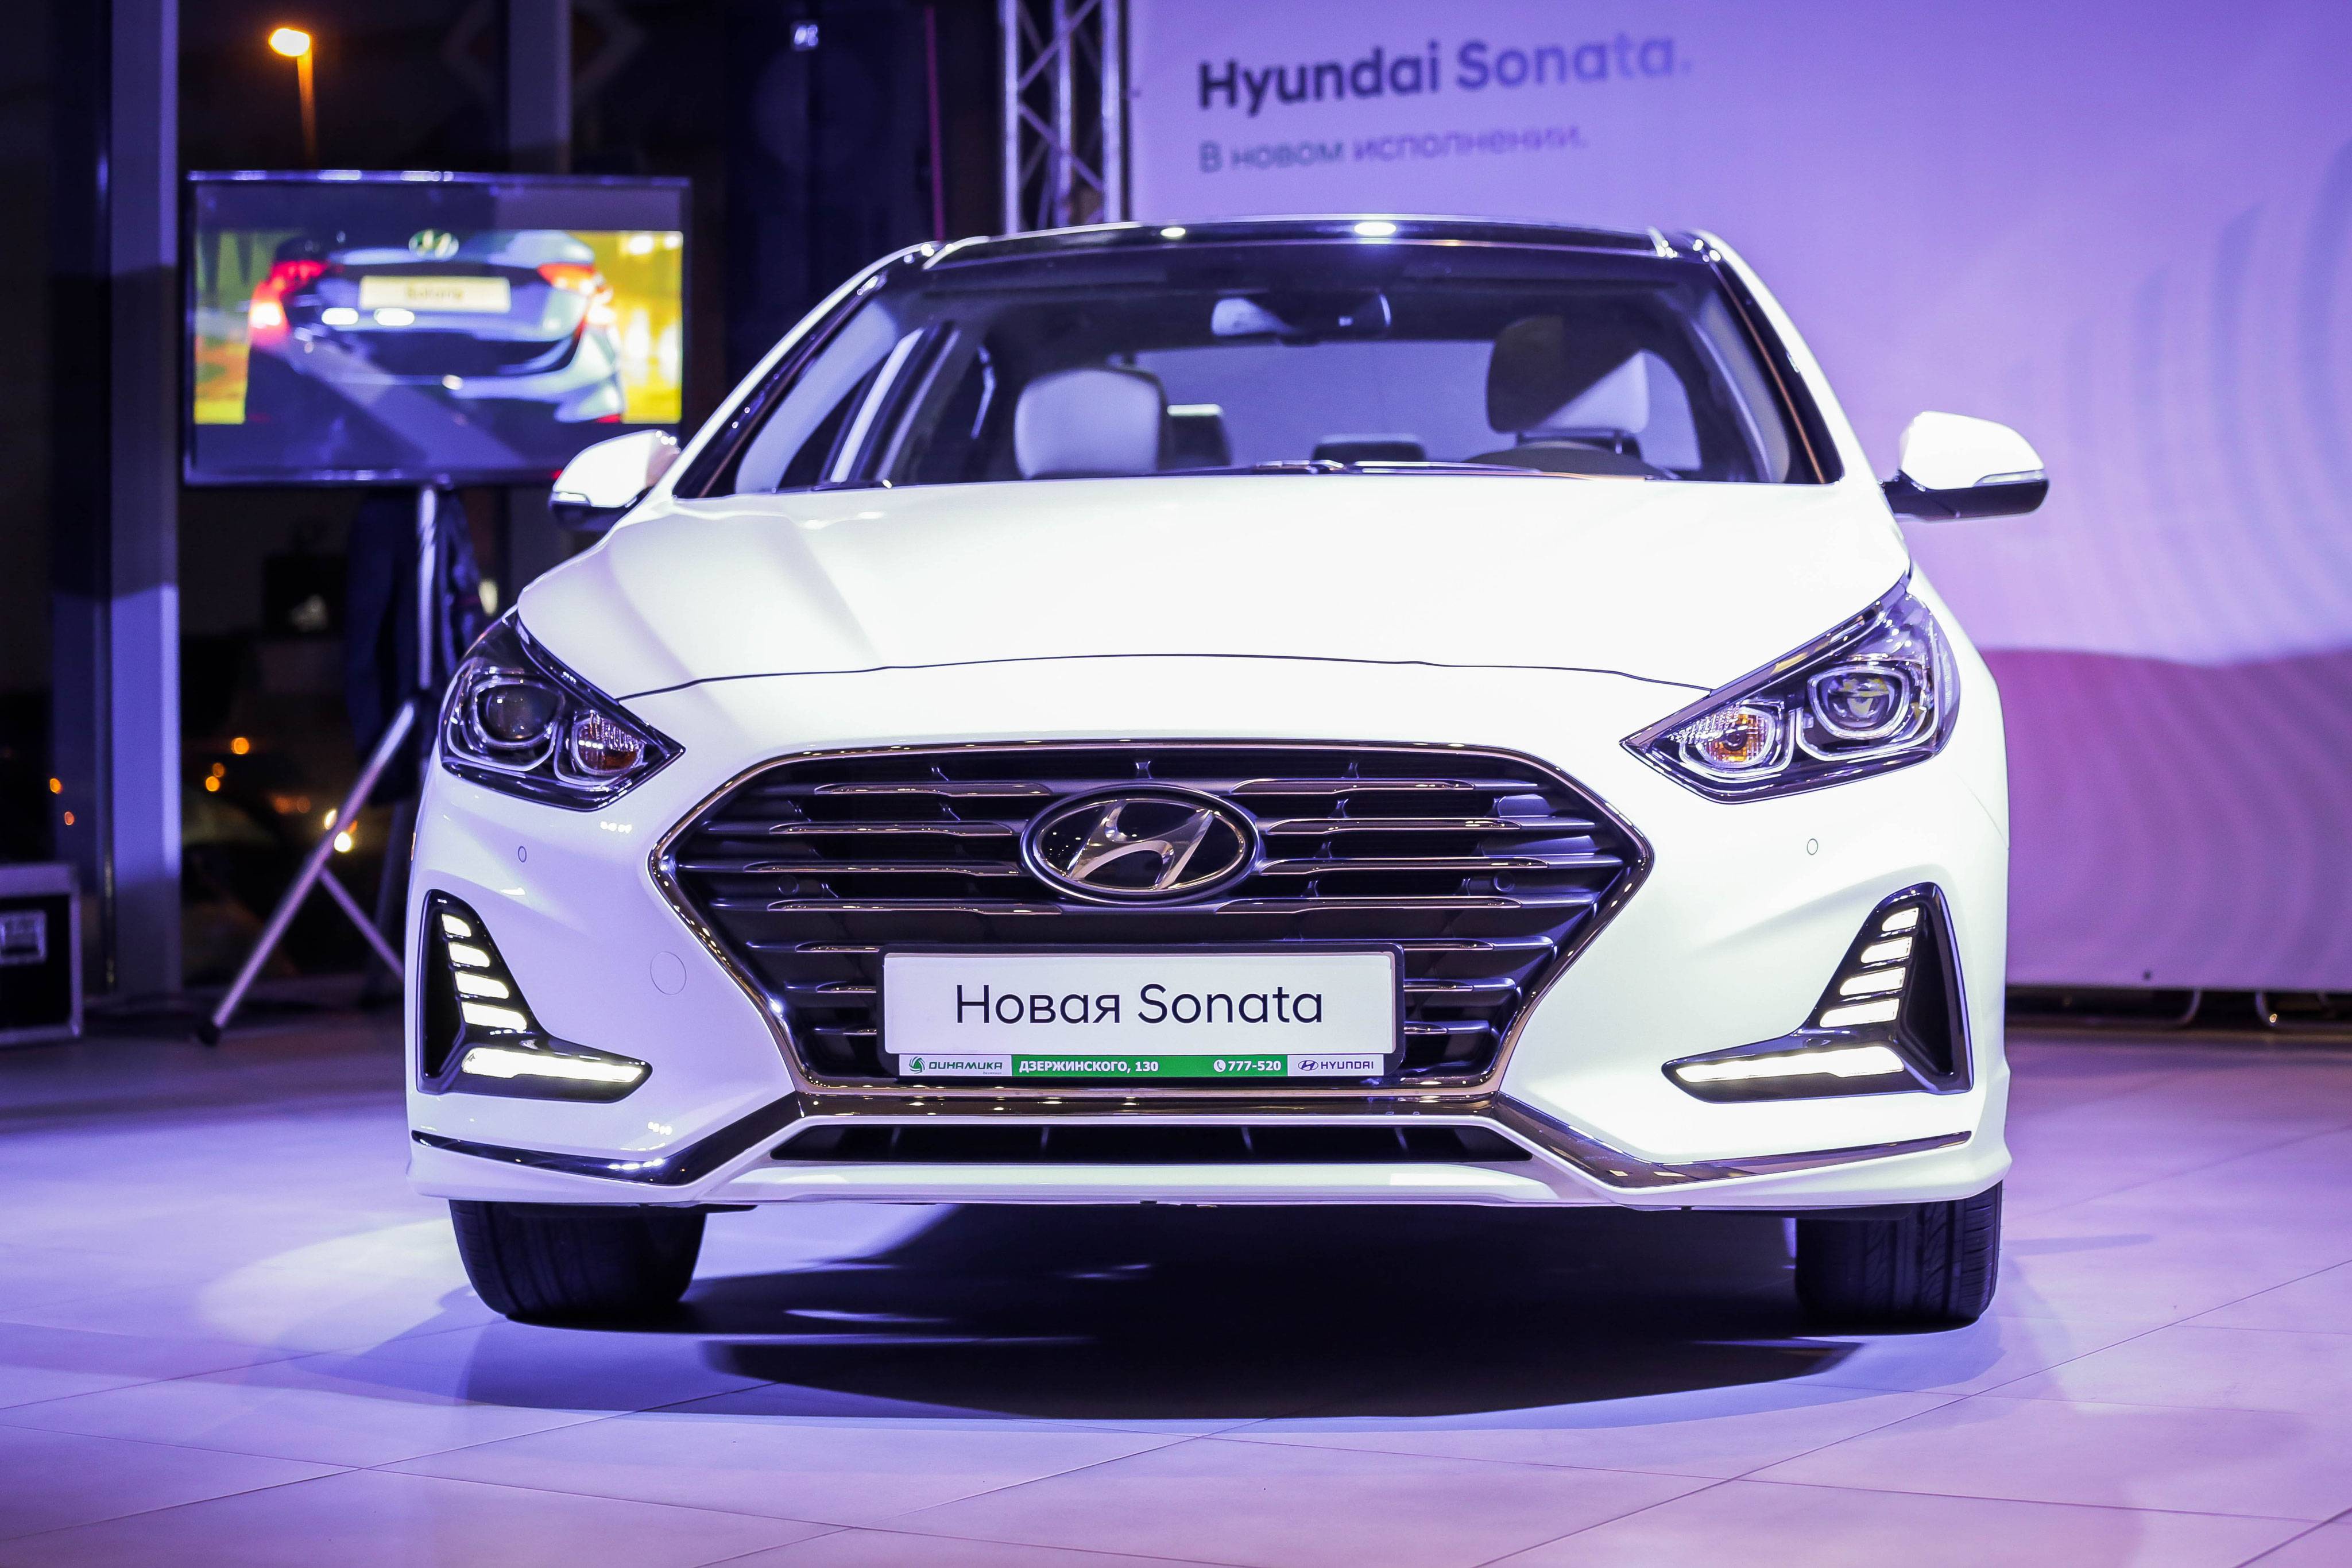 Новая хендай соната цена и комплектация. Хендай Соната новая. Хендай Sonata 2022. Hyundai Sonata 2019. Hyundai Sonata 2022 новая модель.